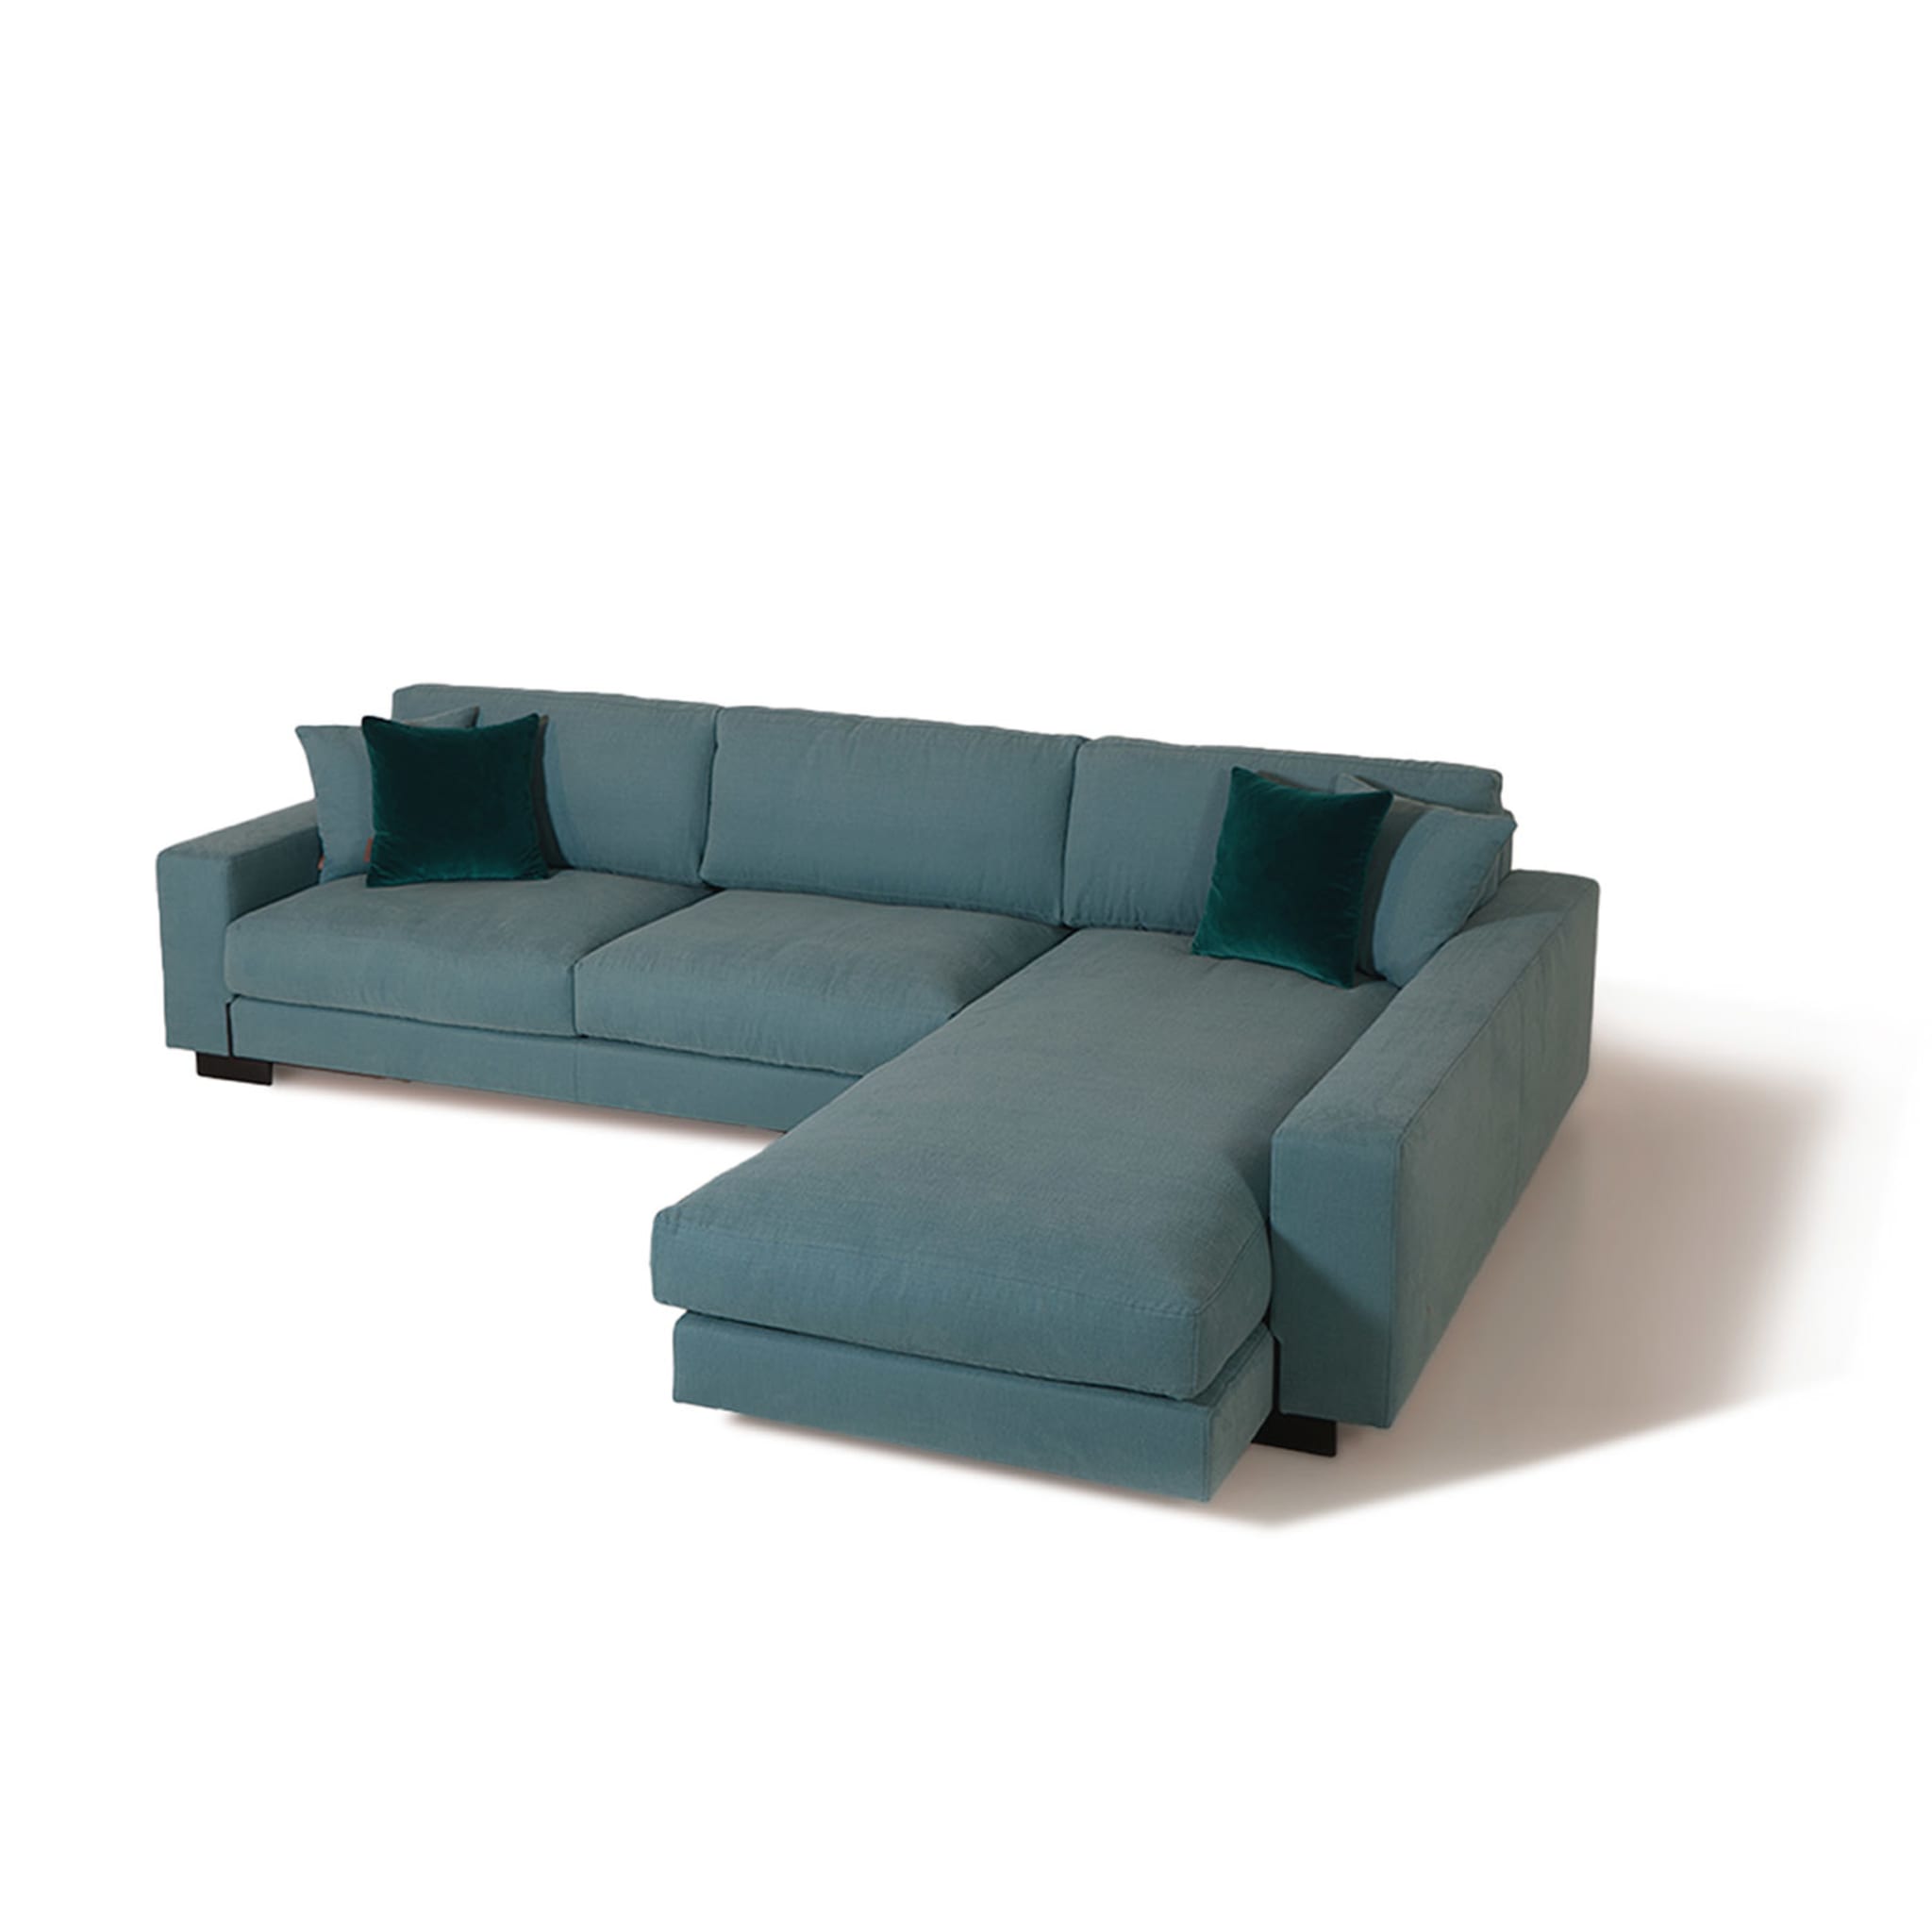 Glam Sofa with Chaise Longye - Alternative view 2